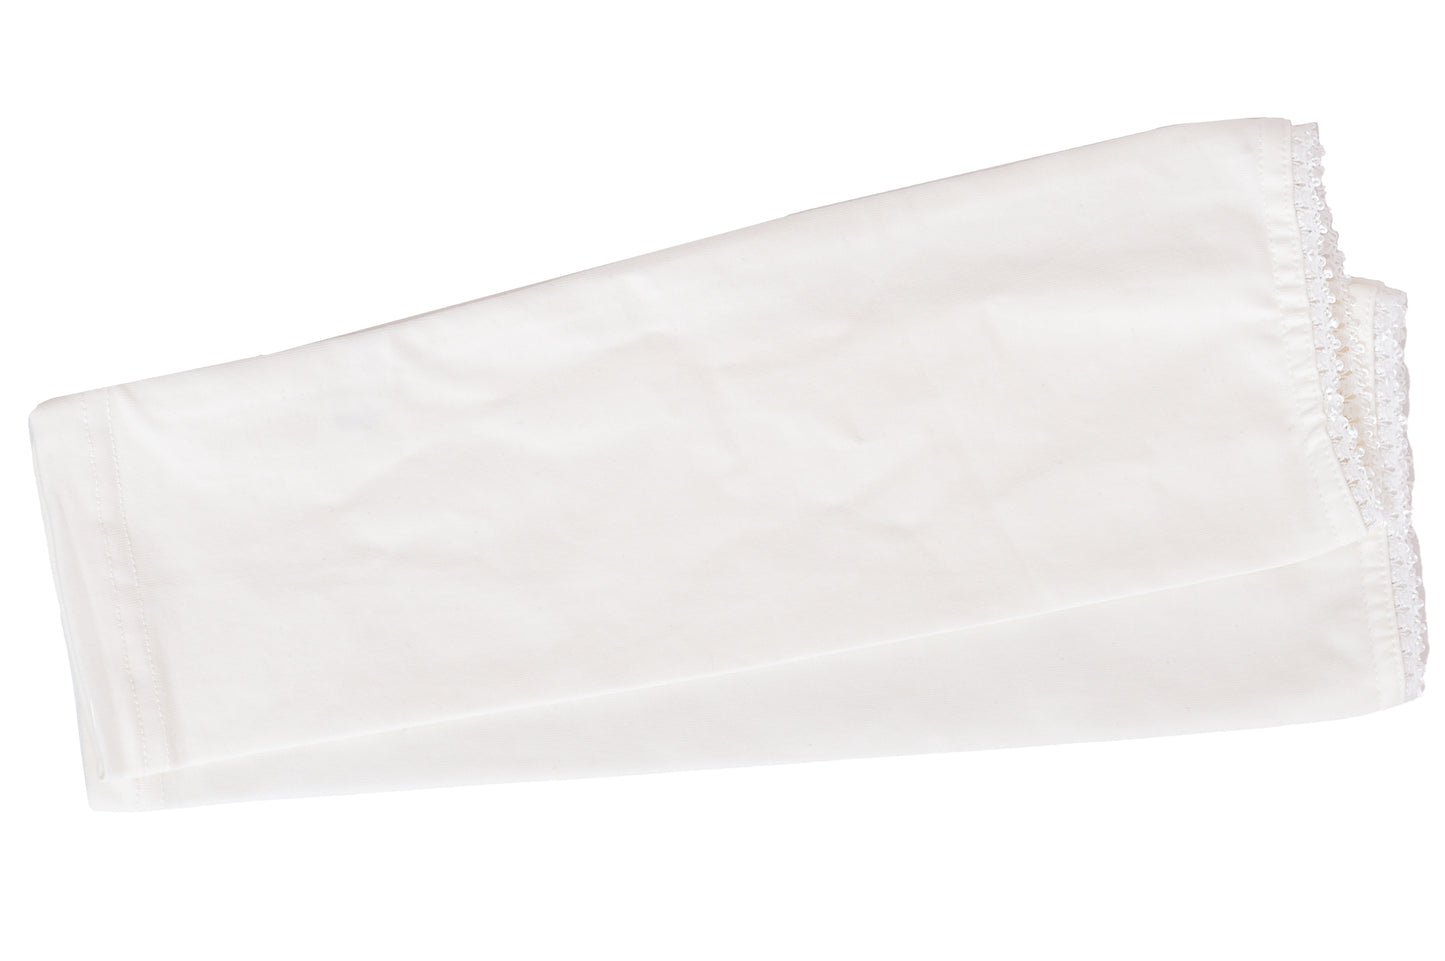 Cotton Arm Band Creamy White